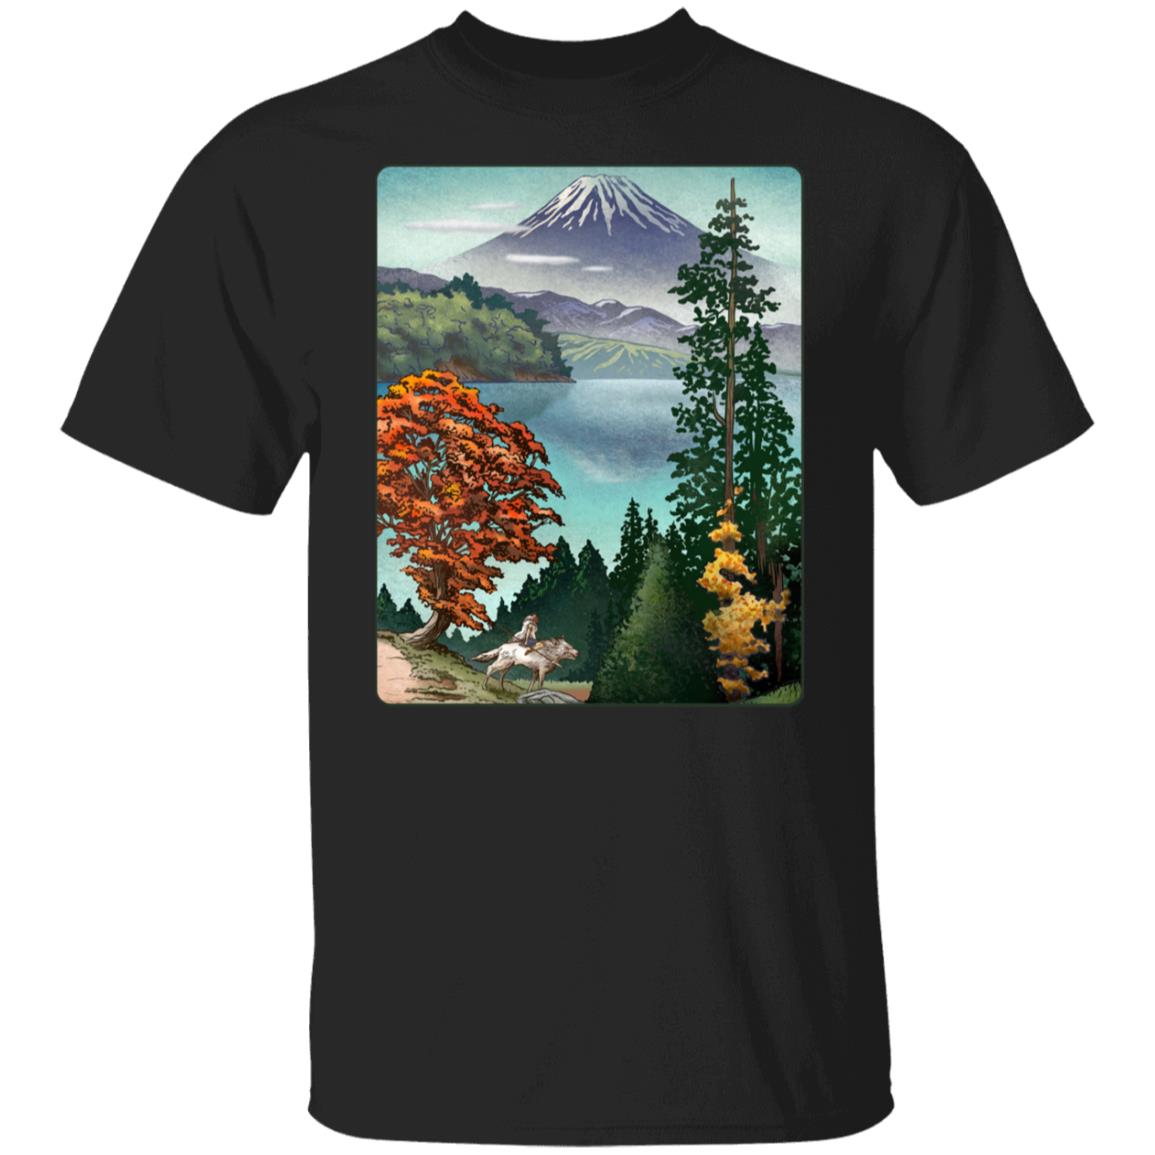 Princess Mononoke Landscape T Shirt